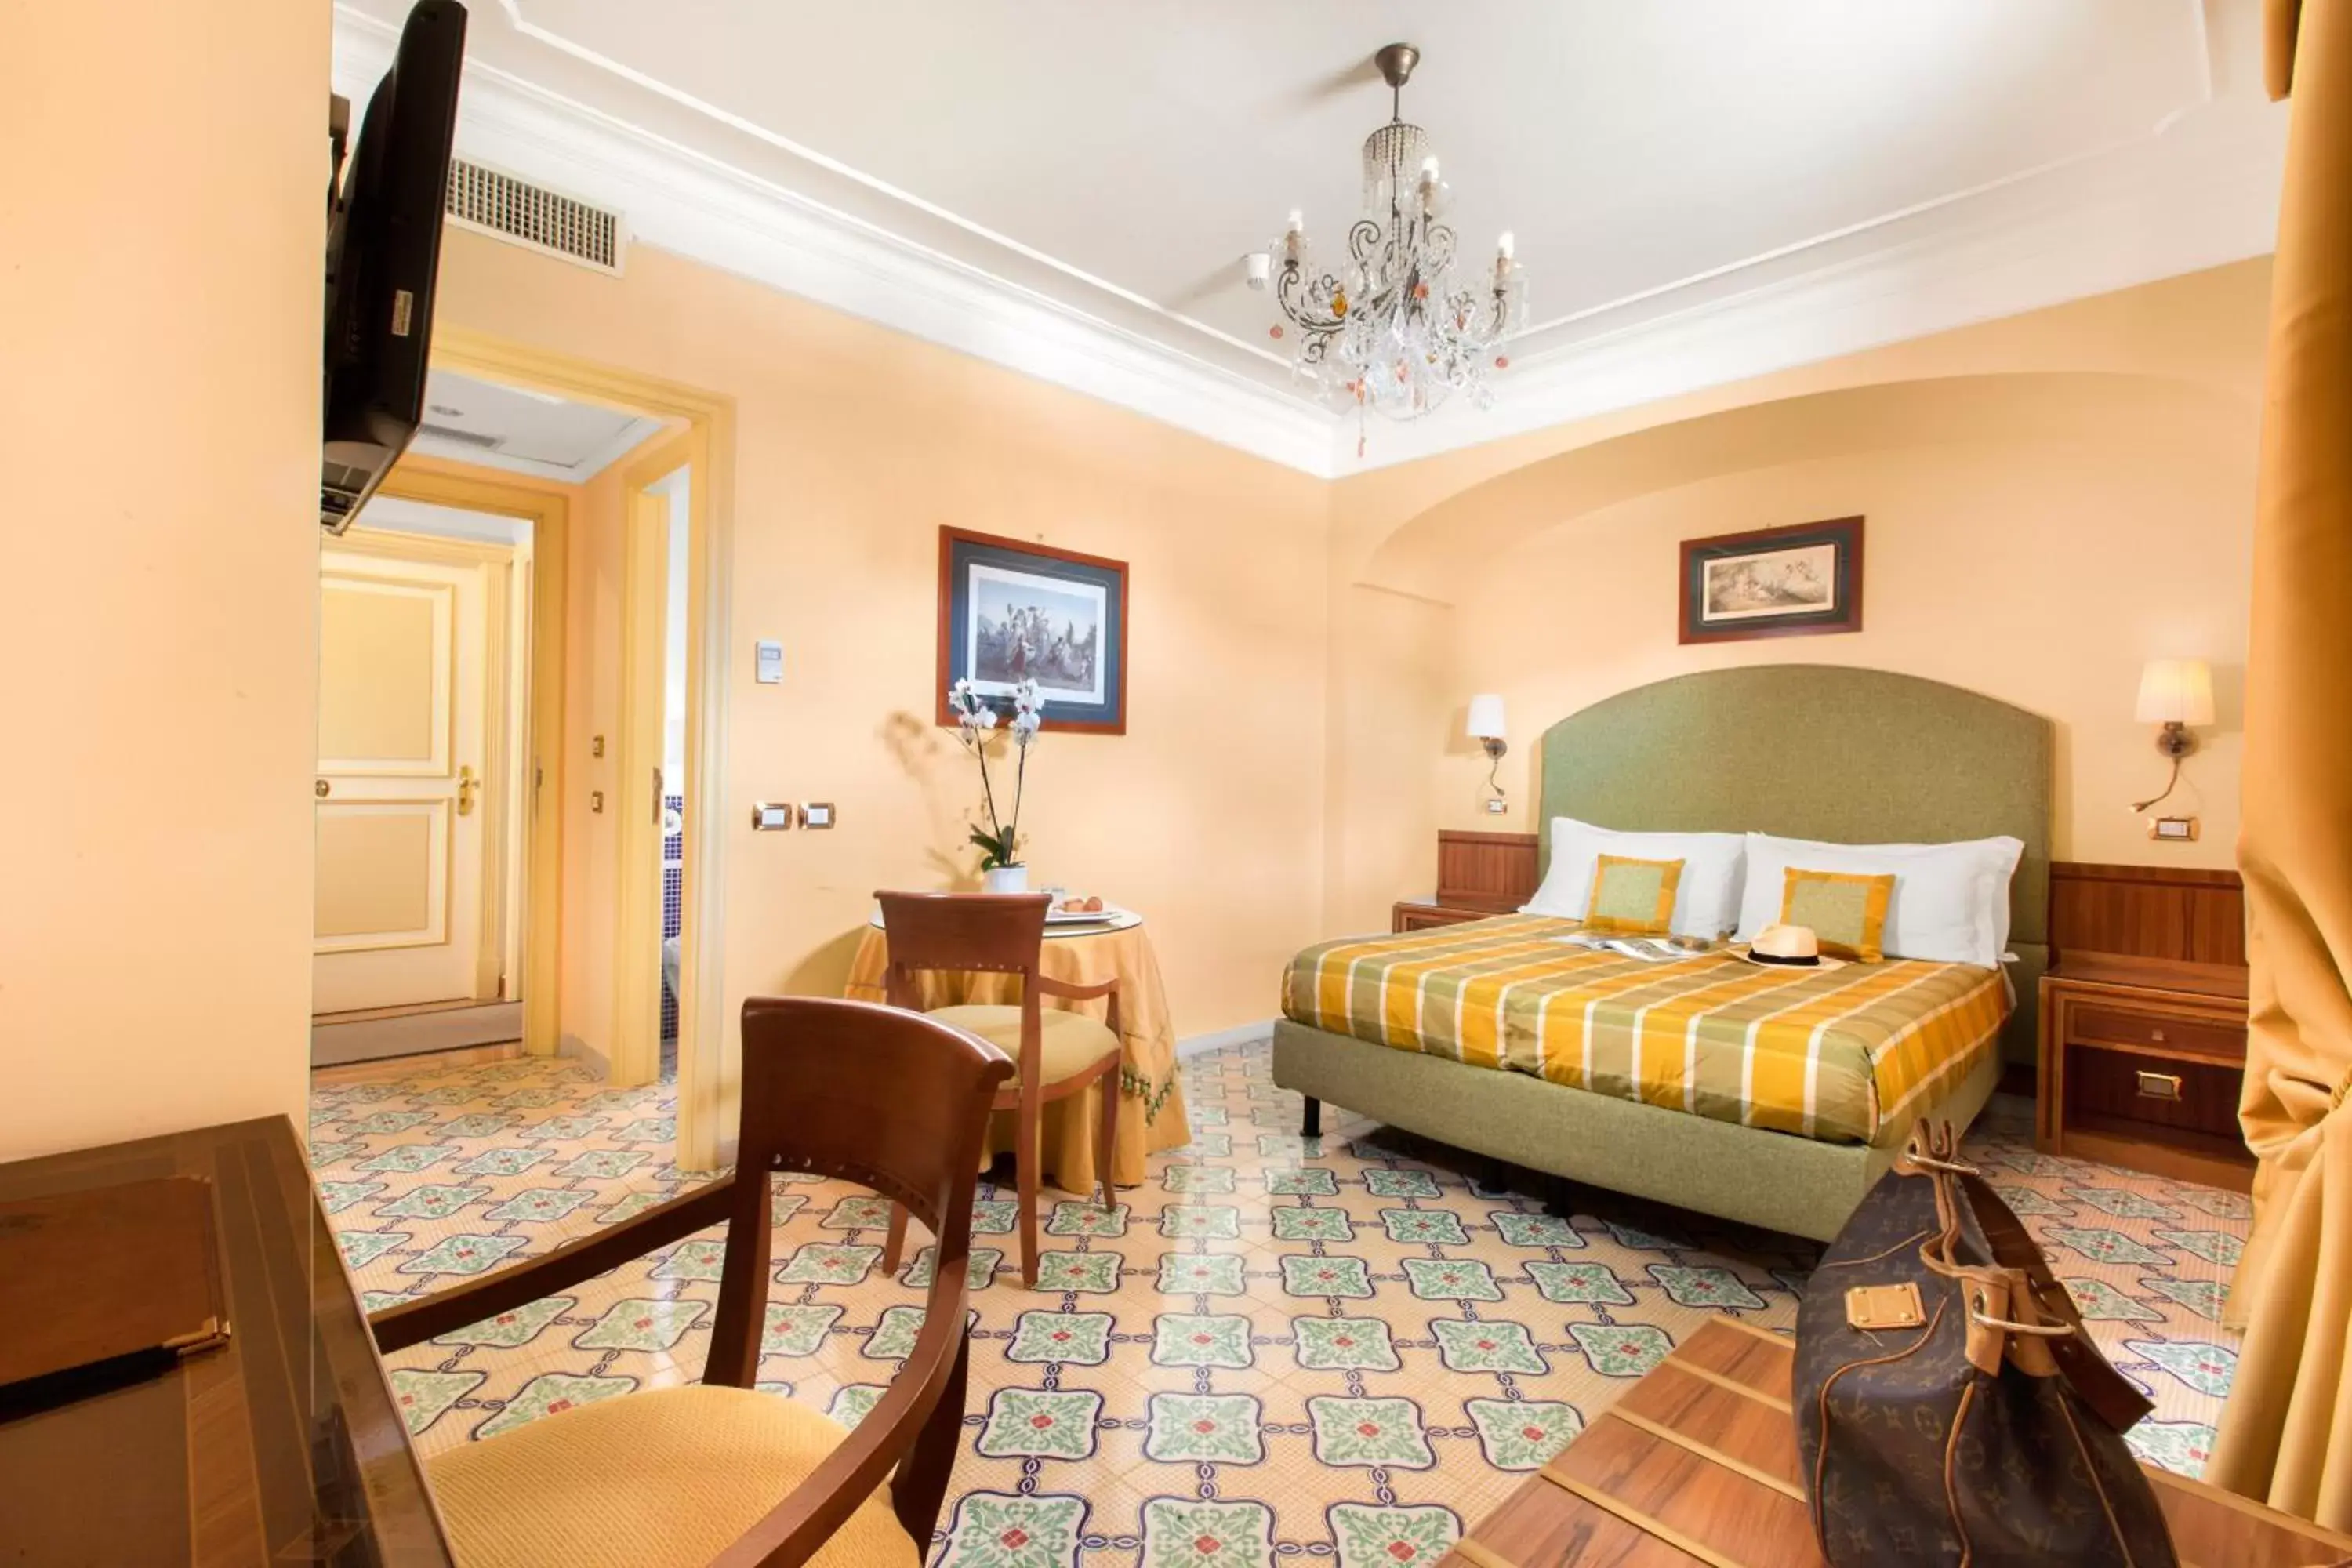 Photo of the whole room in Hotel Antiche Mura